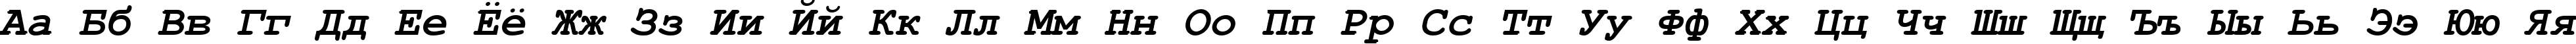 Пример написания русского алфавита шрифтом Courier New Bold Italic